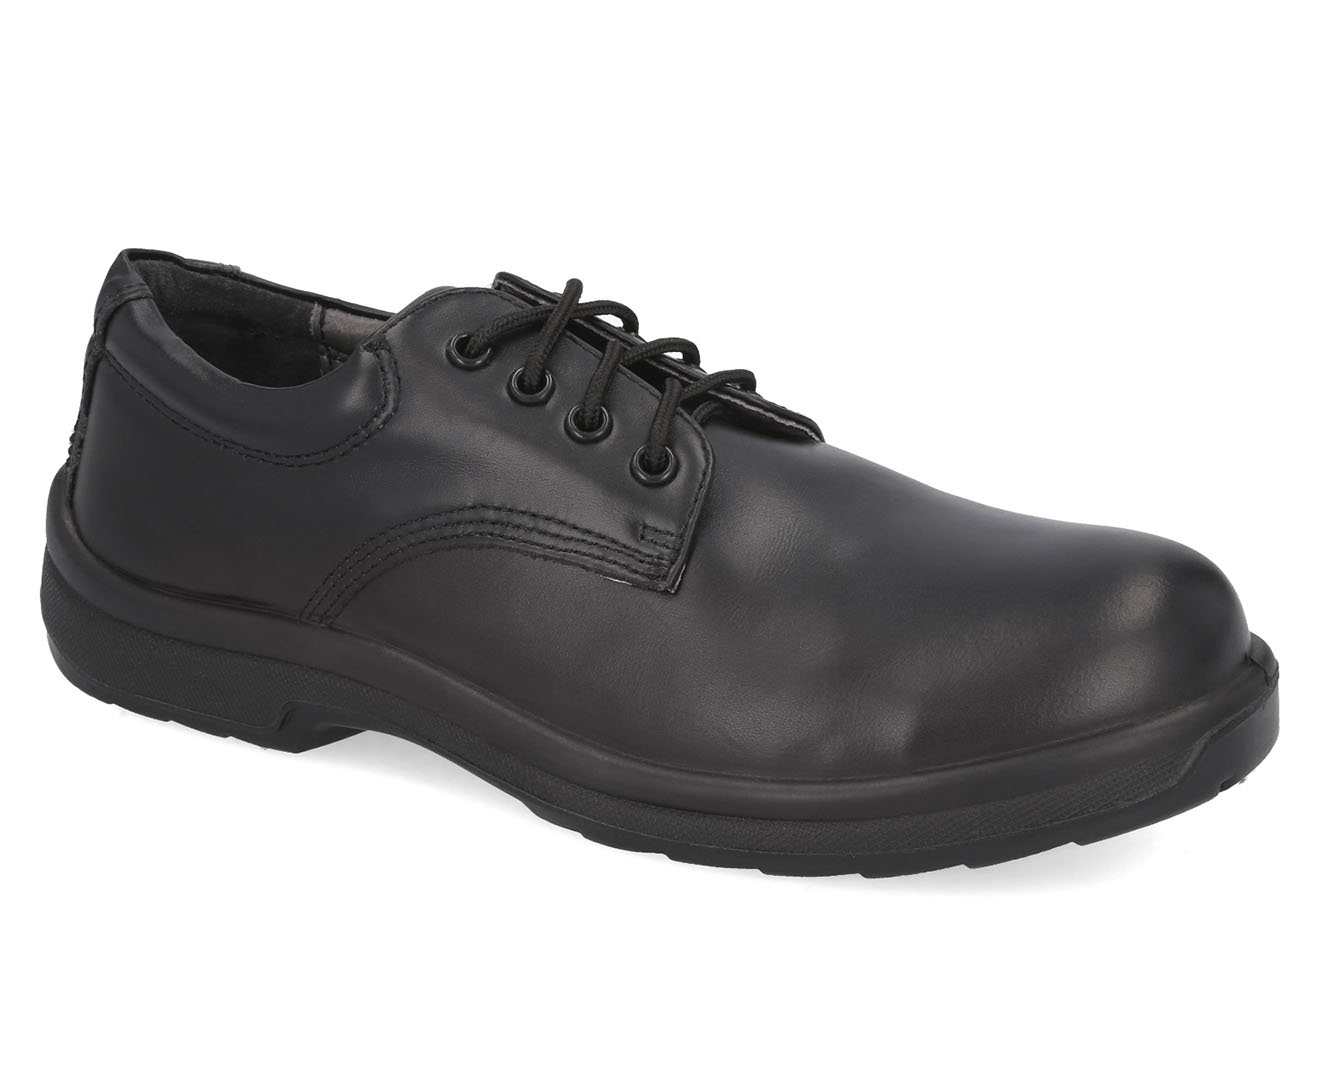 Bata Men's Low Cut Traction CT Safety Shoes - Black | Catch.co.nz